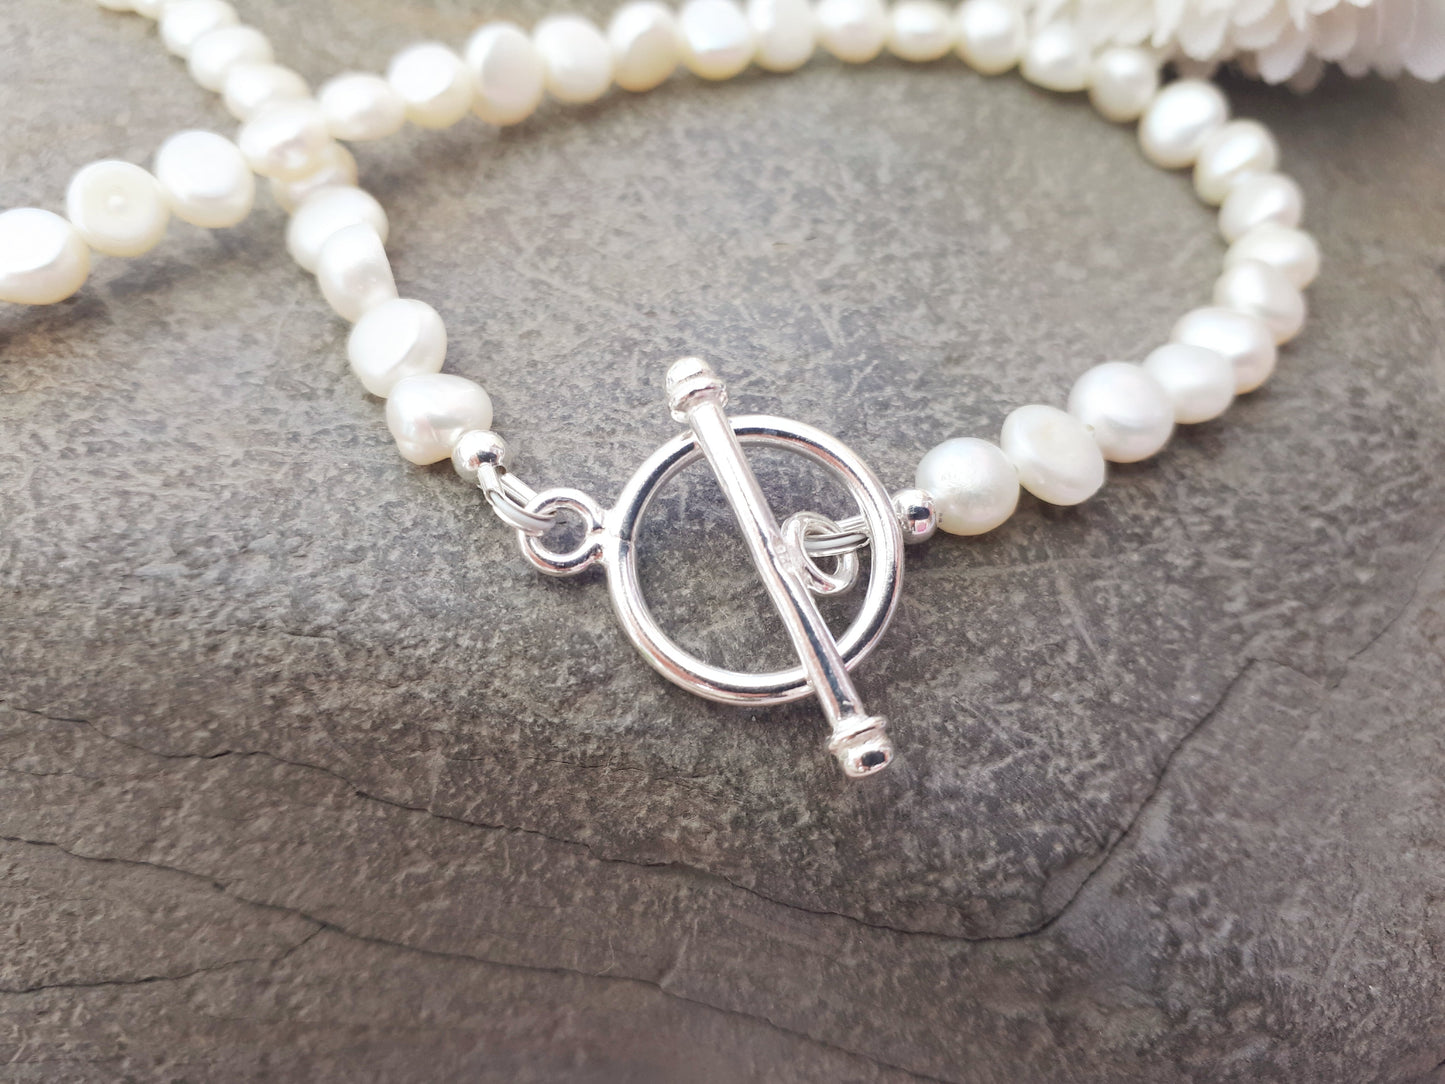 Freshwater pearl choker. June birthstone necklace.